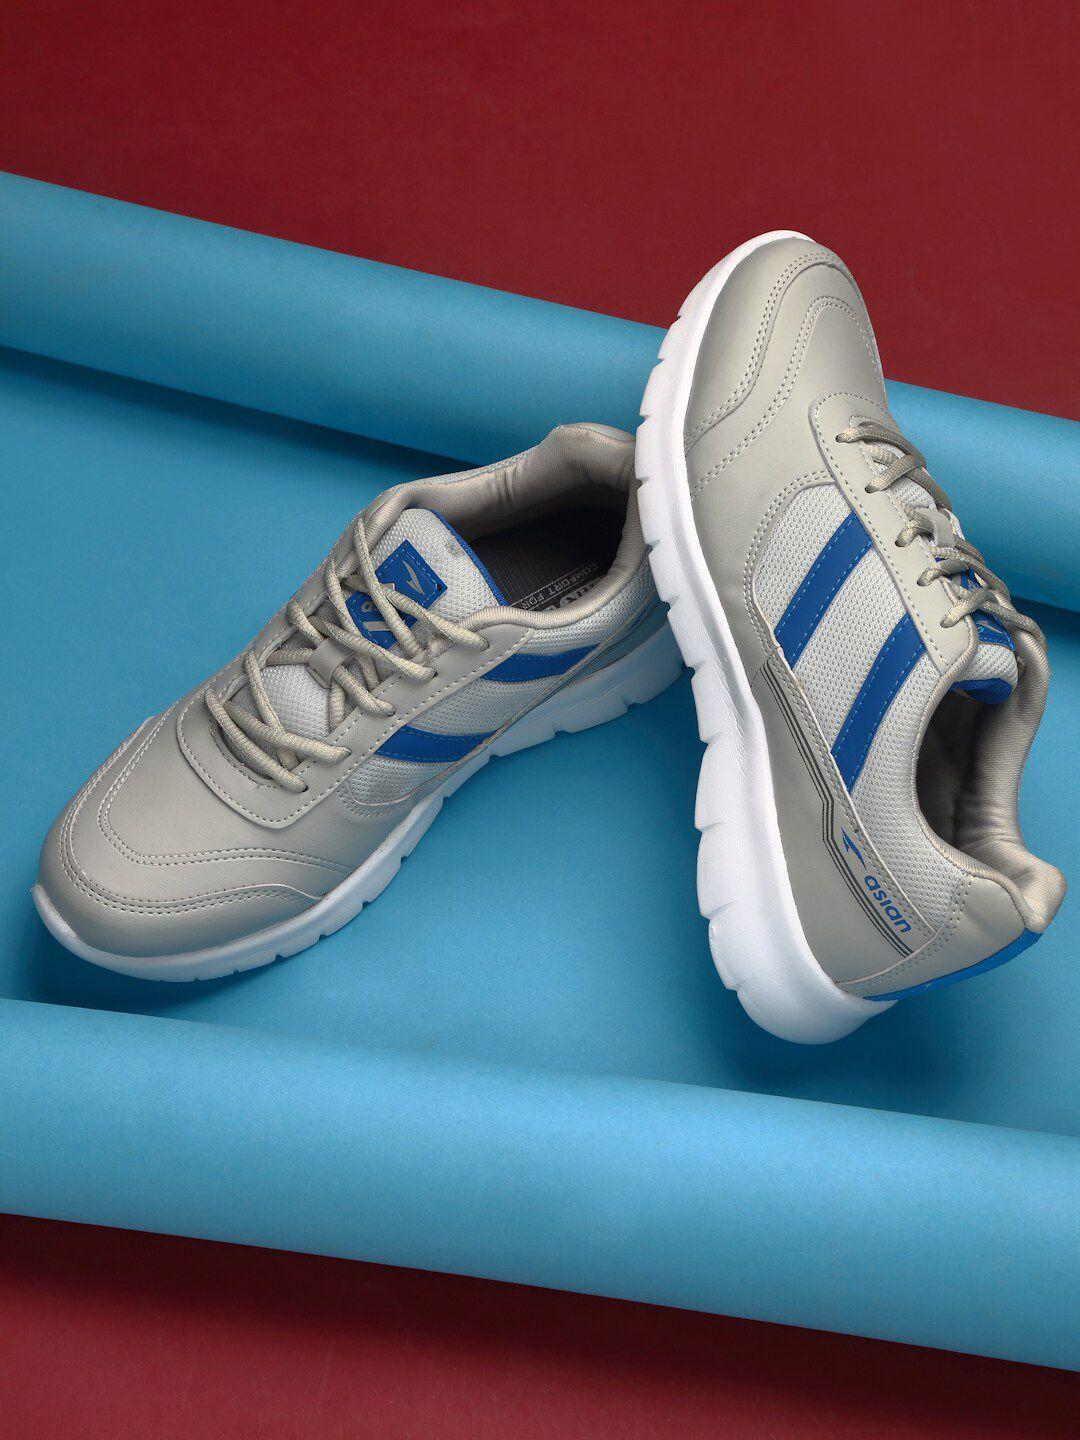 asian-men-electric-02-running-shoes